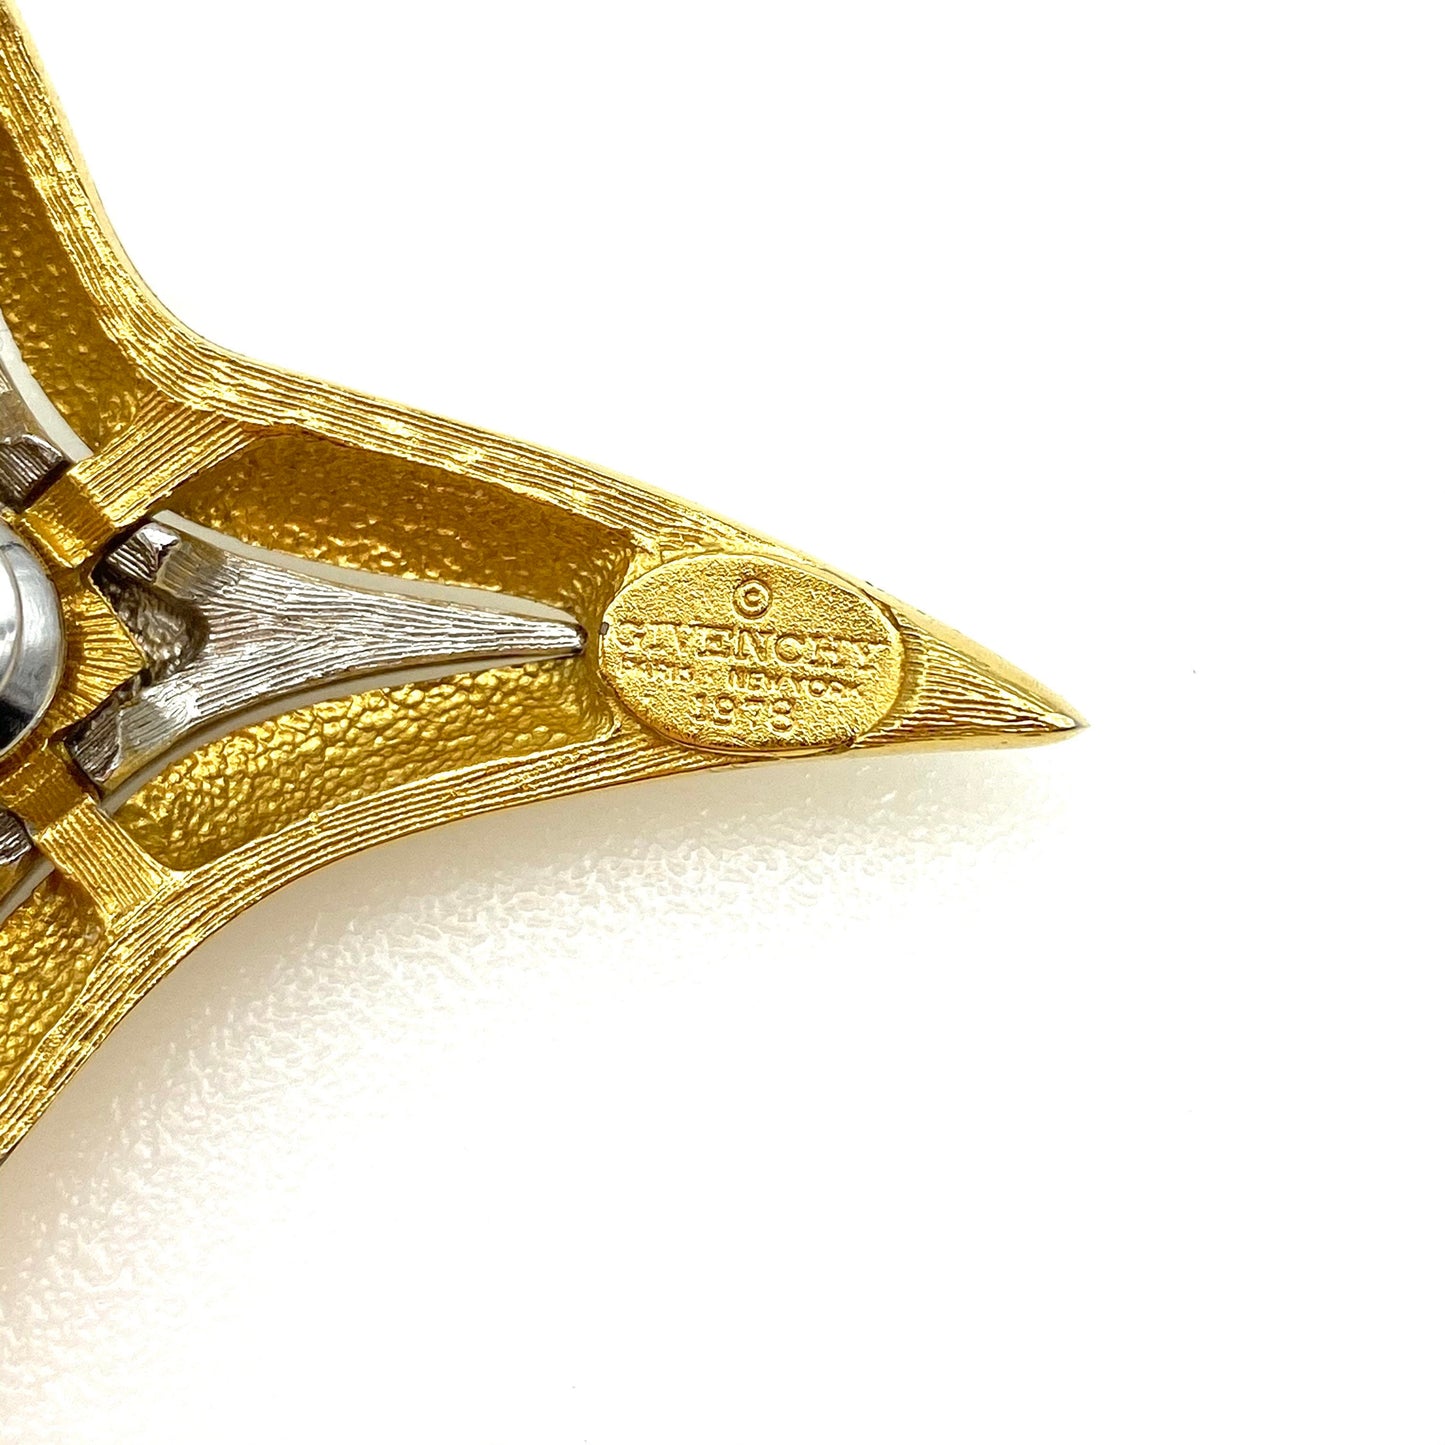 Givenchy 1978 Gold Plated Swarovski Crystal Star Brooch